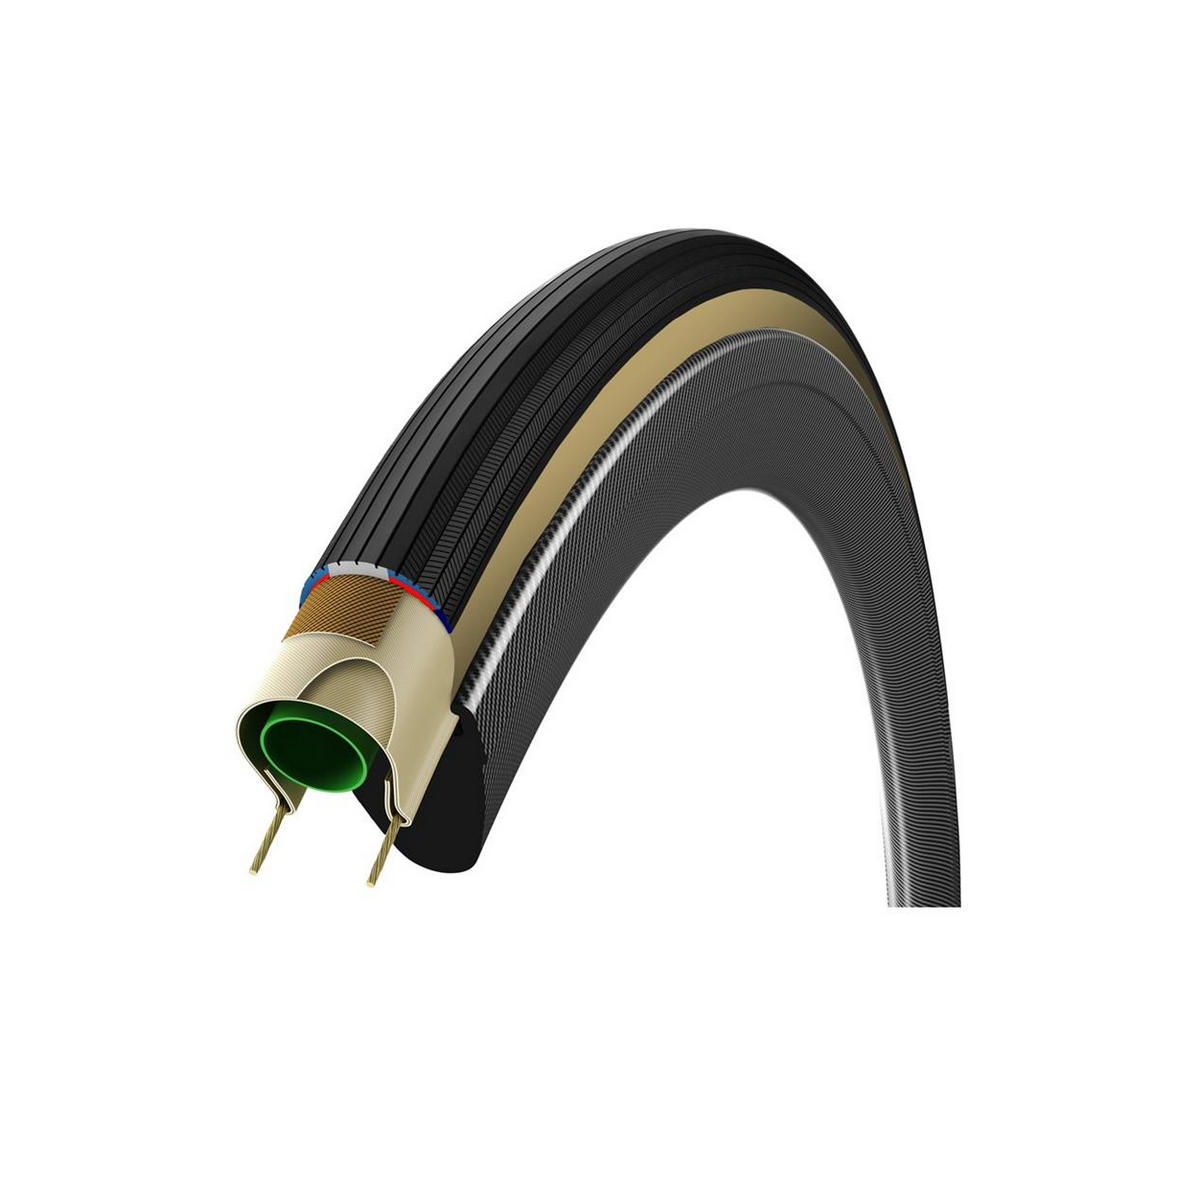 Tire Corsa Control G+ Graphene 700x28c Clincher Folding Black/Skinwall